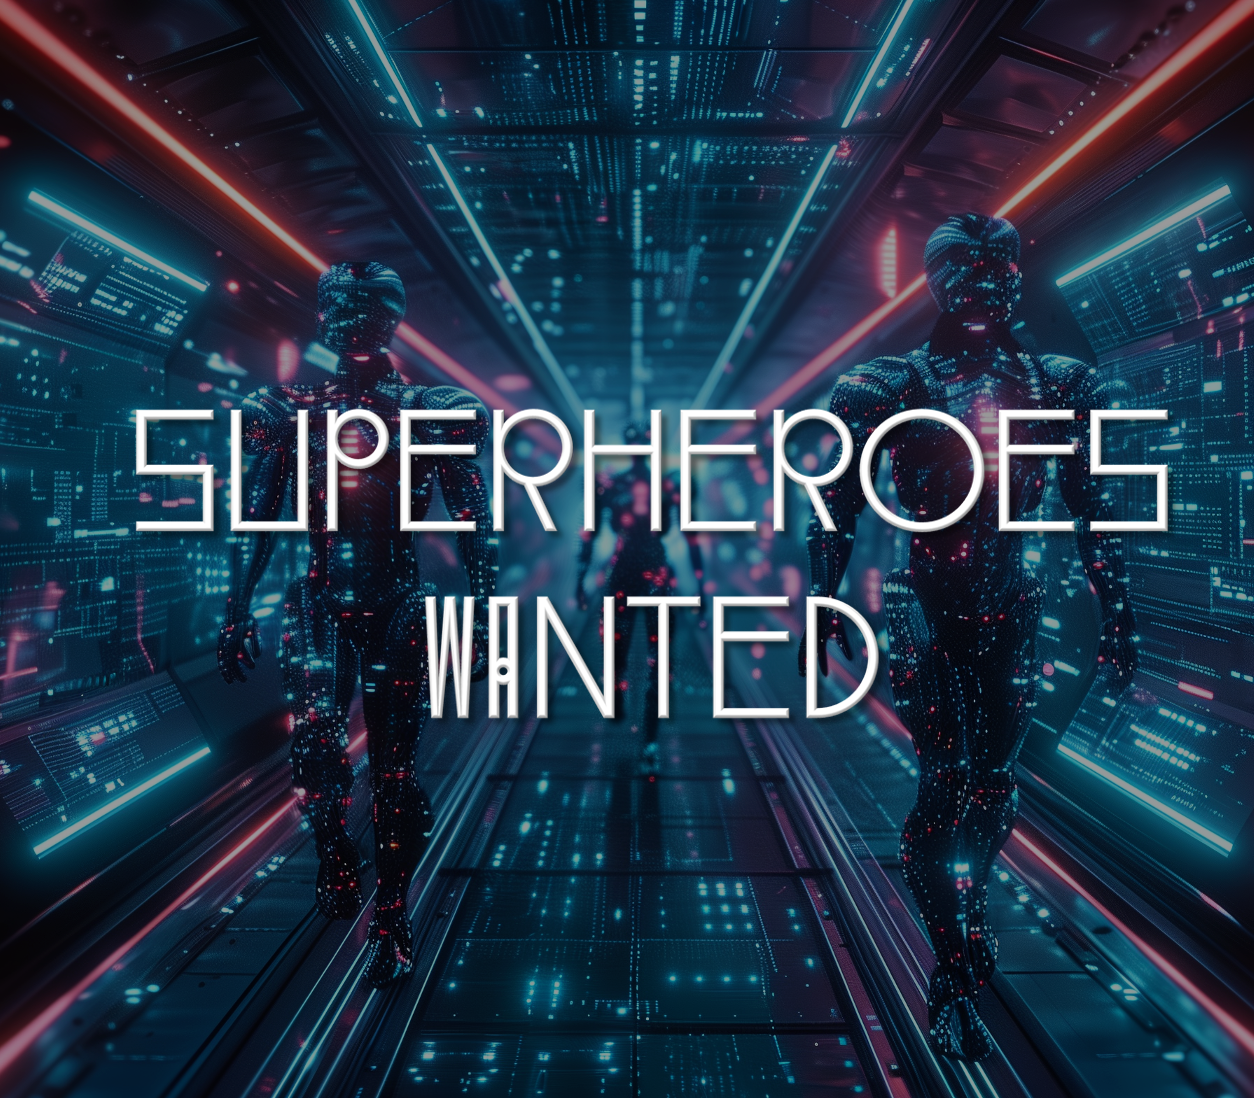 Superheroes-Wanted